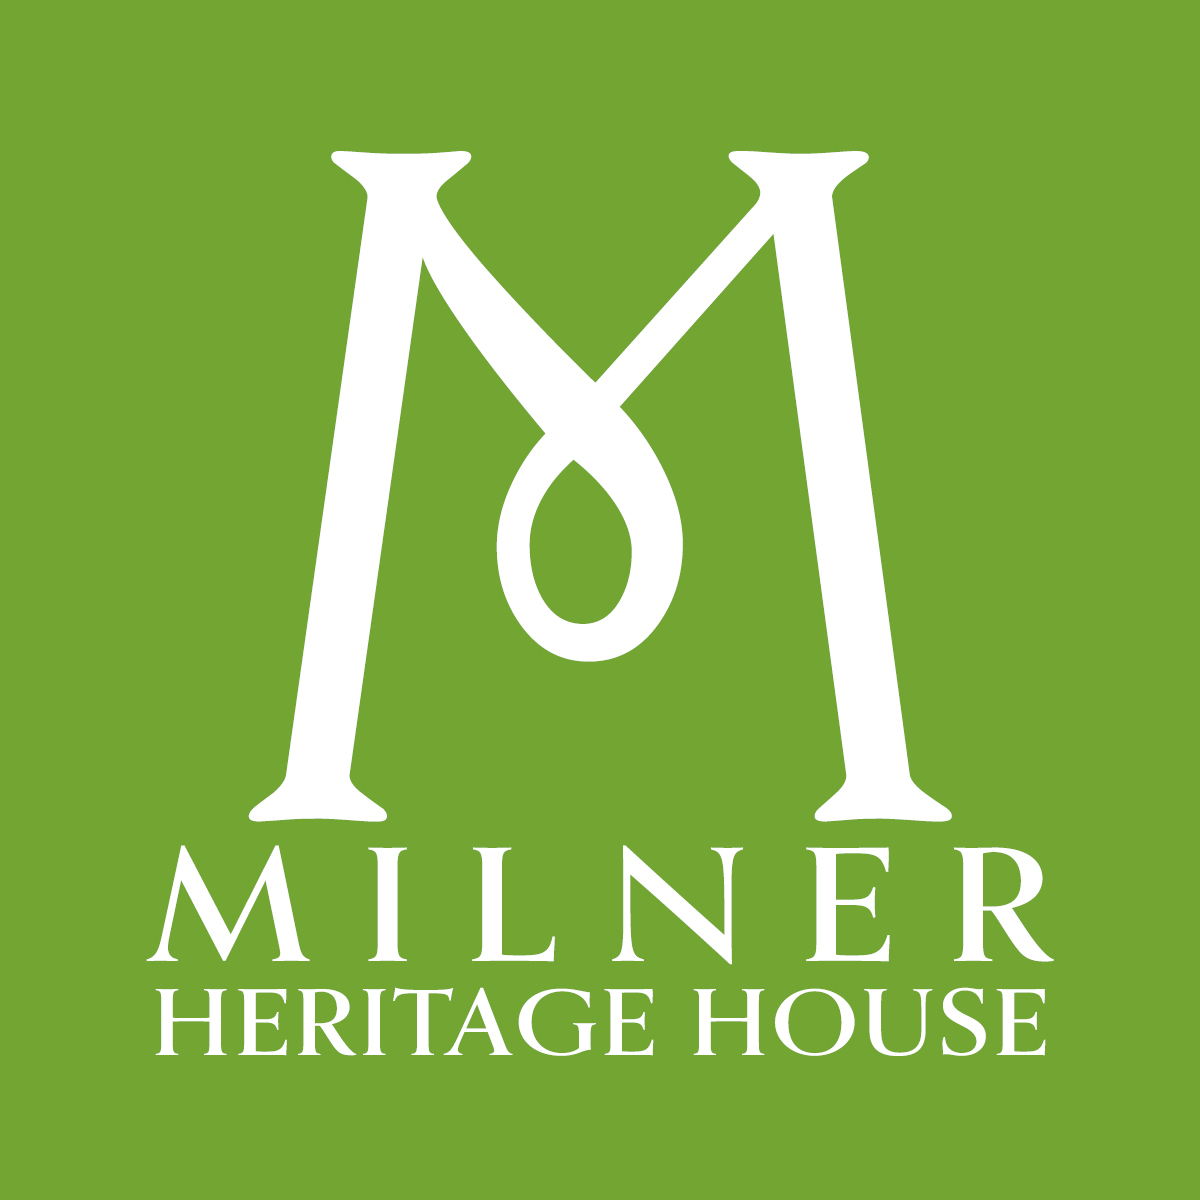 Milner Heritage House